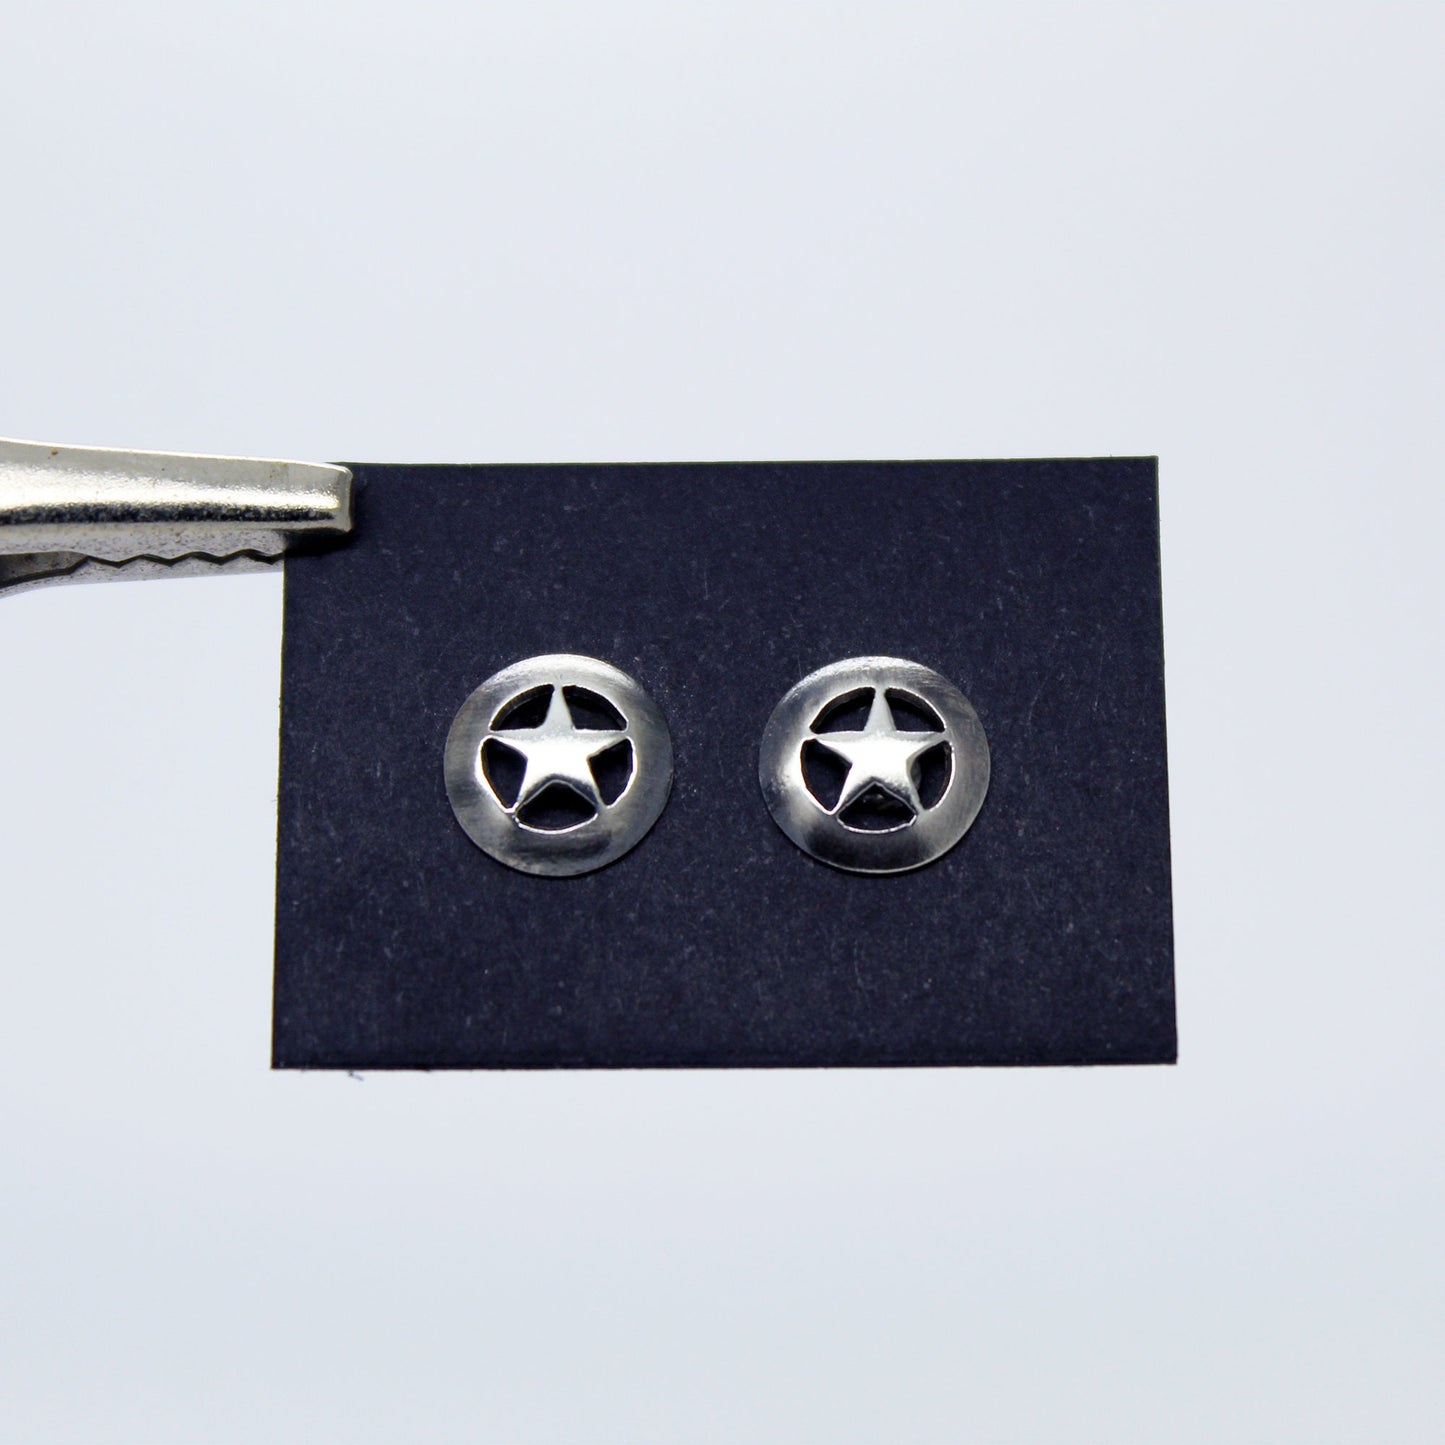 Estrella de Texas Ranger pendientes en plata 925